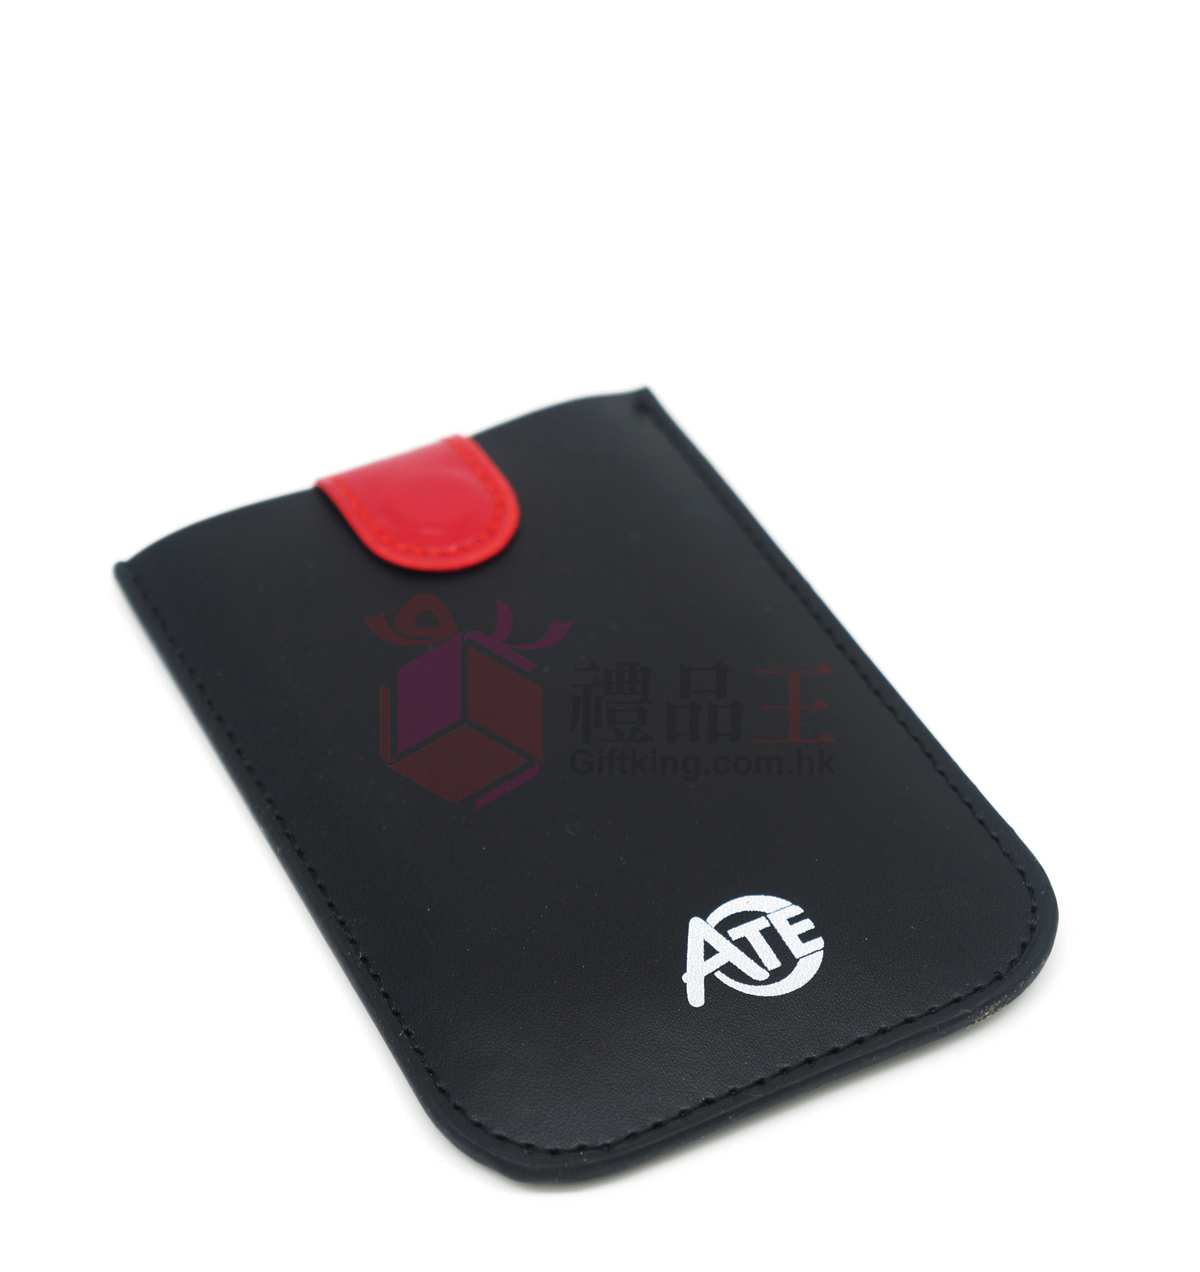 ATE card holder (Advertising gift)